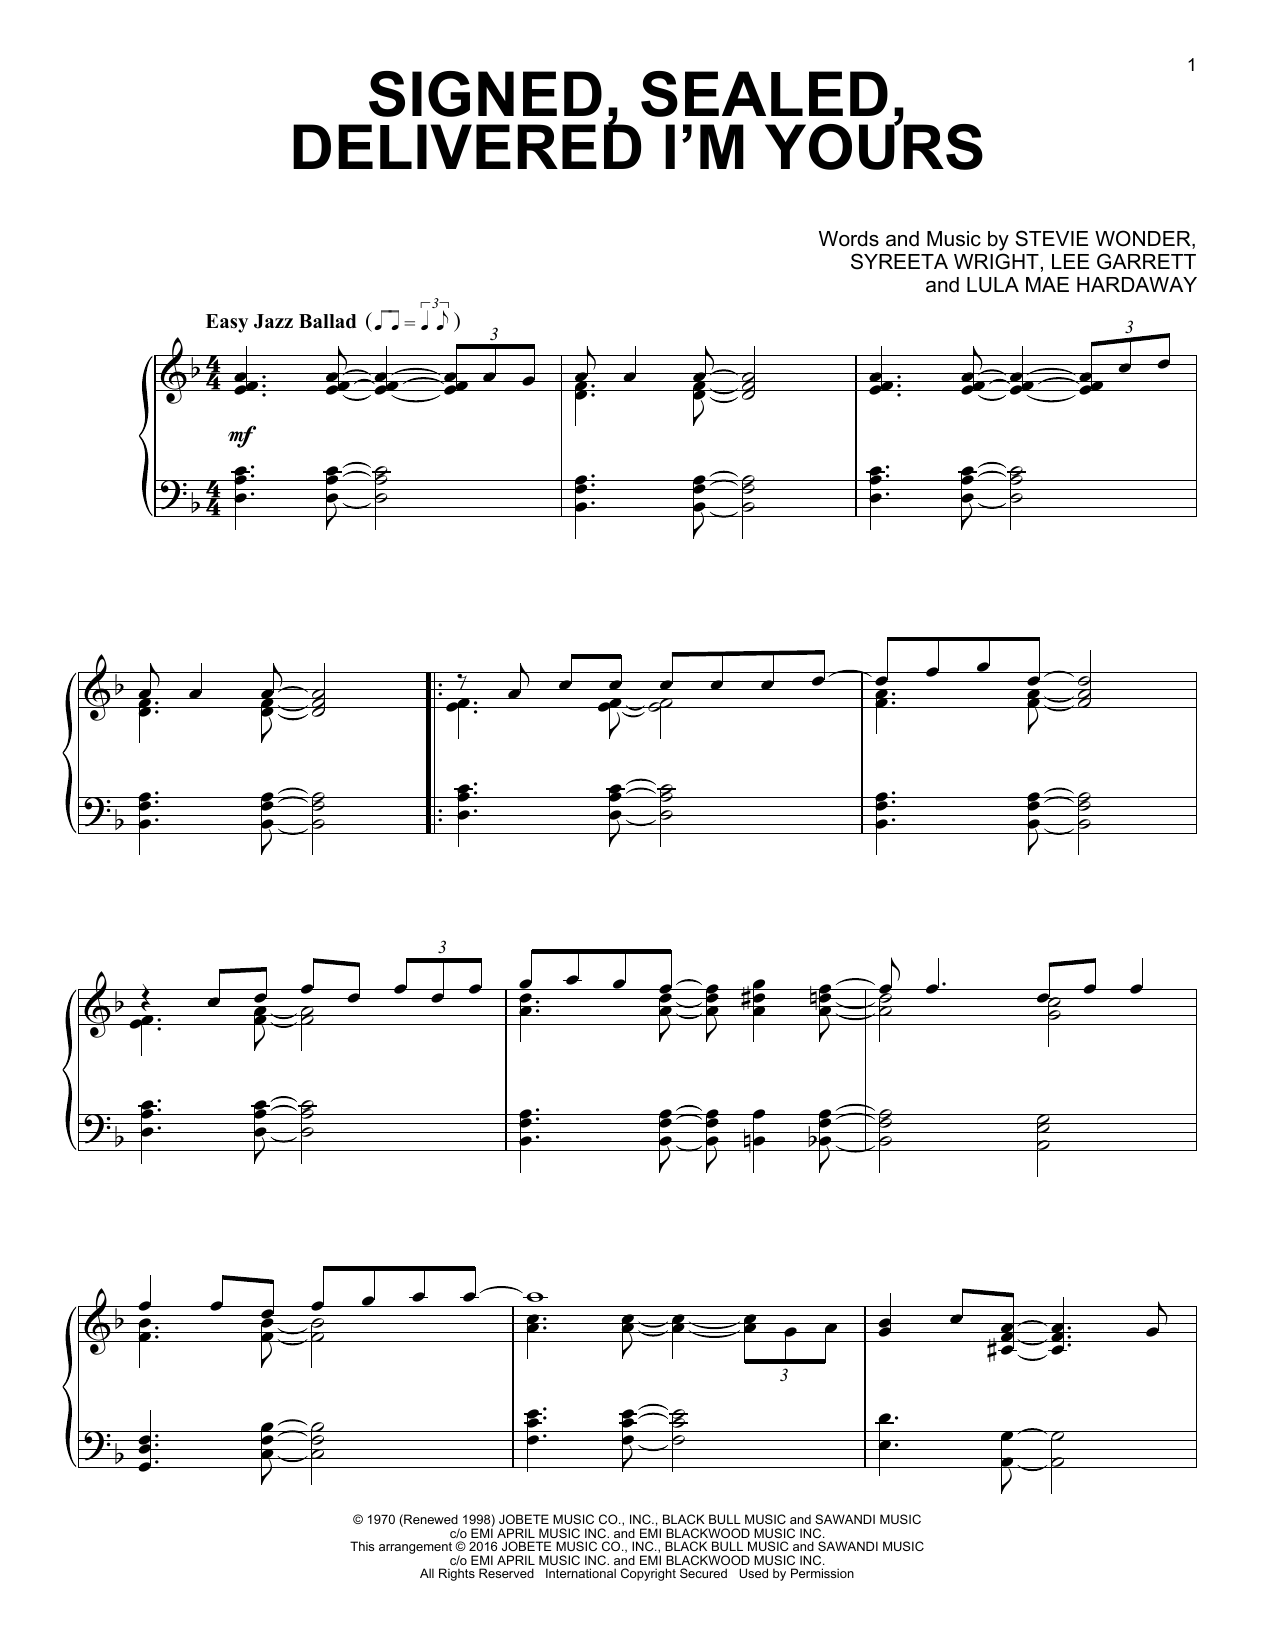 Stevie Wonder Signed, Sealed, Delivered I'm Yours [Jazz version] Sheet Music Notes & Chords for Piano - Download or Print PDF